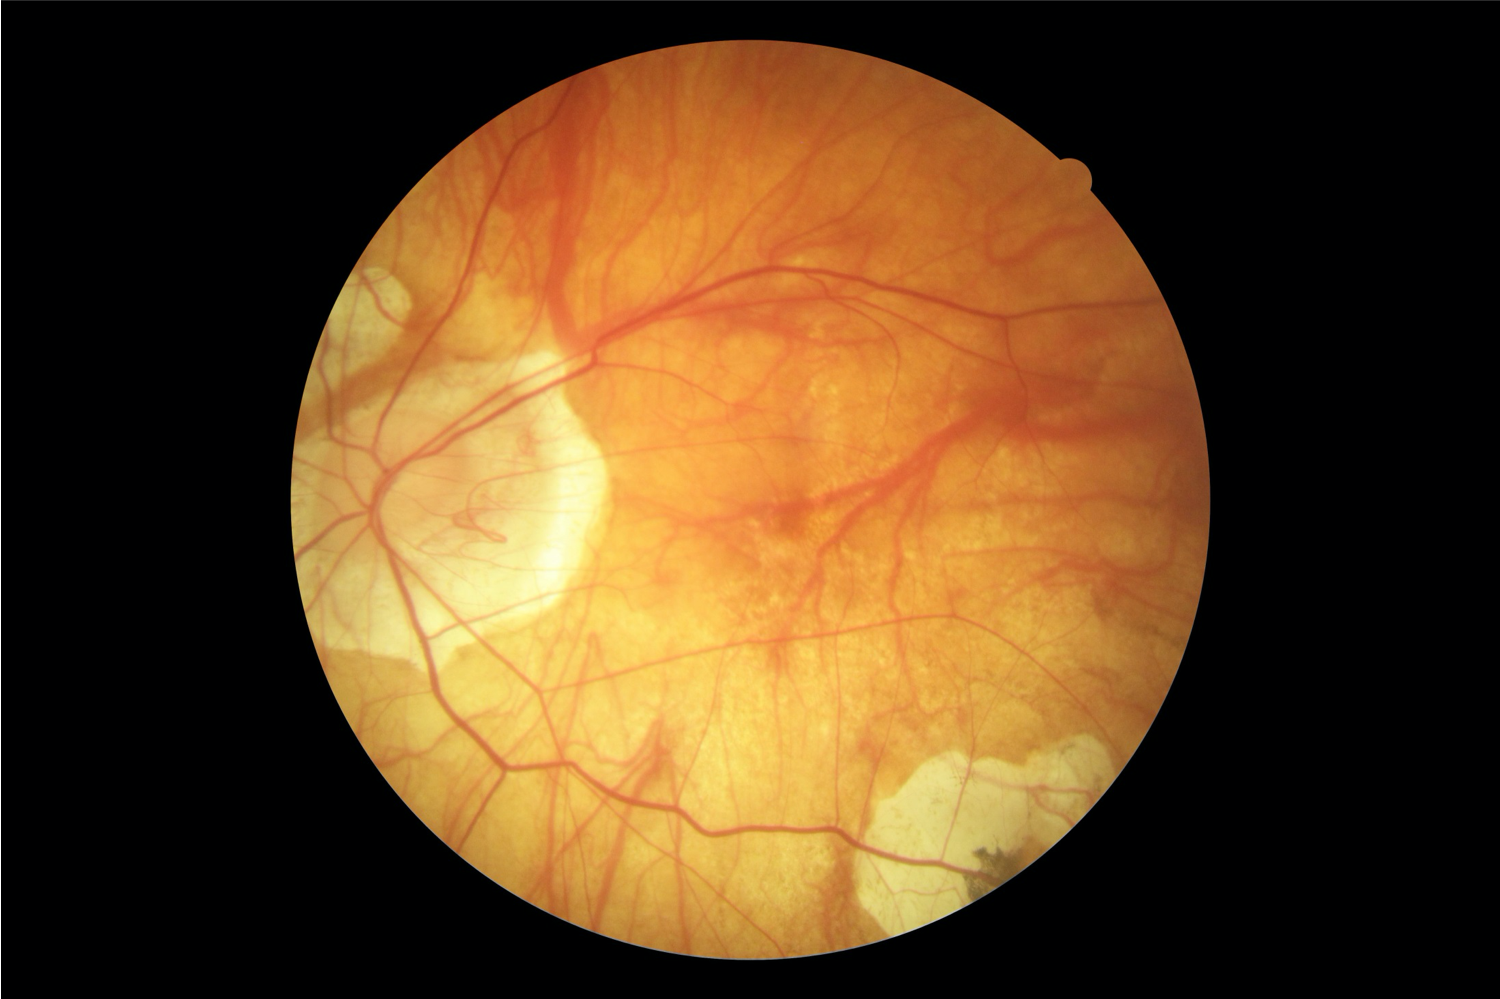 Grade 3 pathological myopia with diffuse chorioretinal atrophy